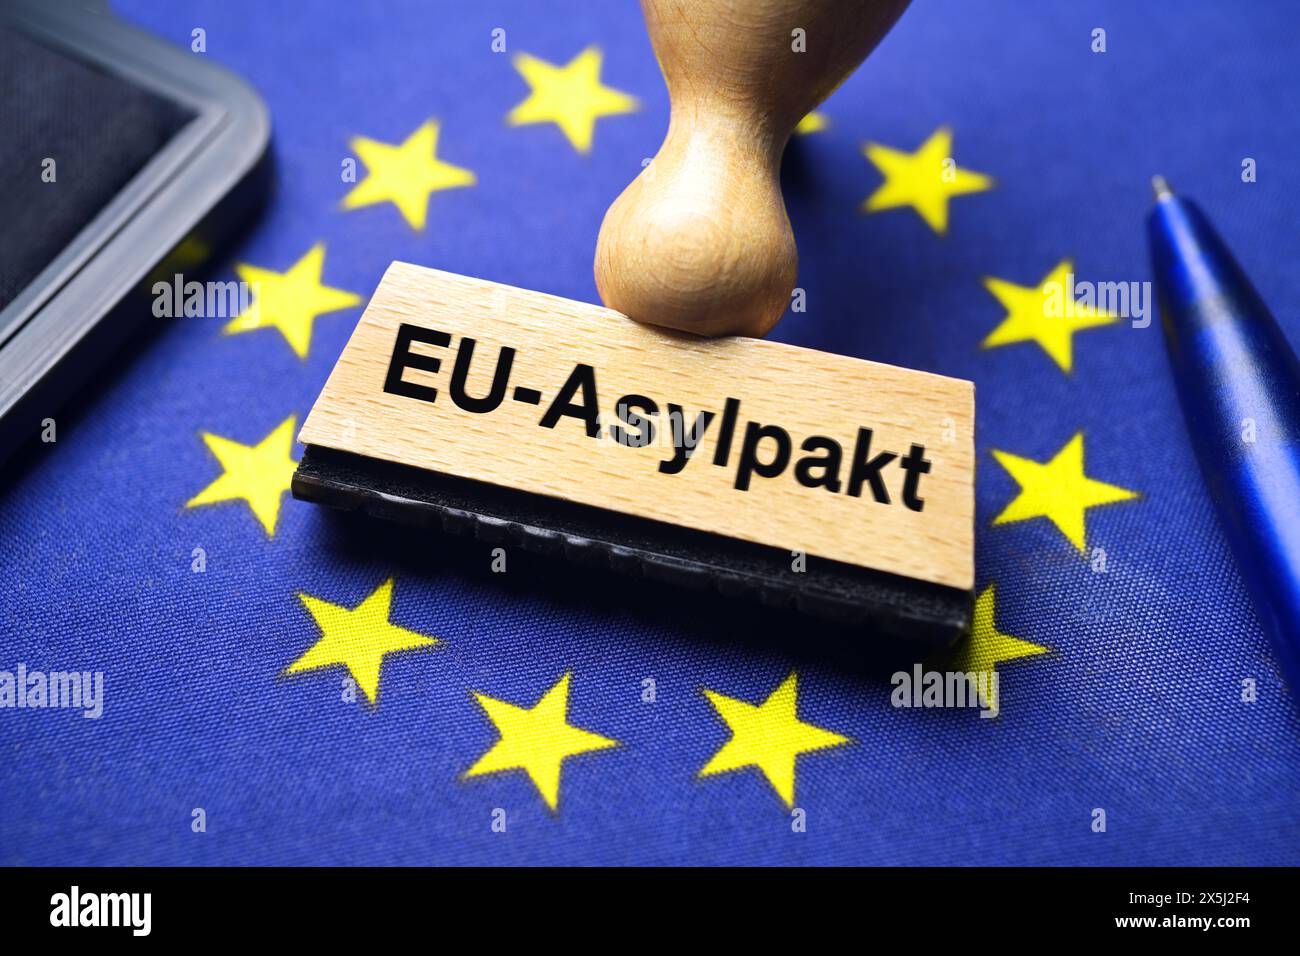 FOTOMONTAGE, Stempel mit Aufschrift EU-Asylpakt auf EU-Fahne Foto Stock